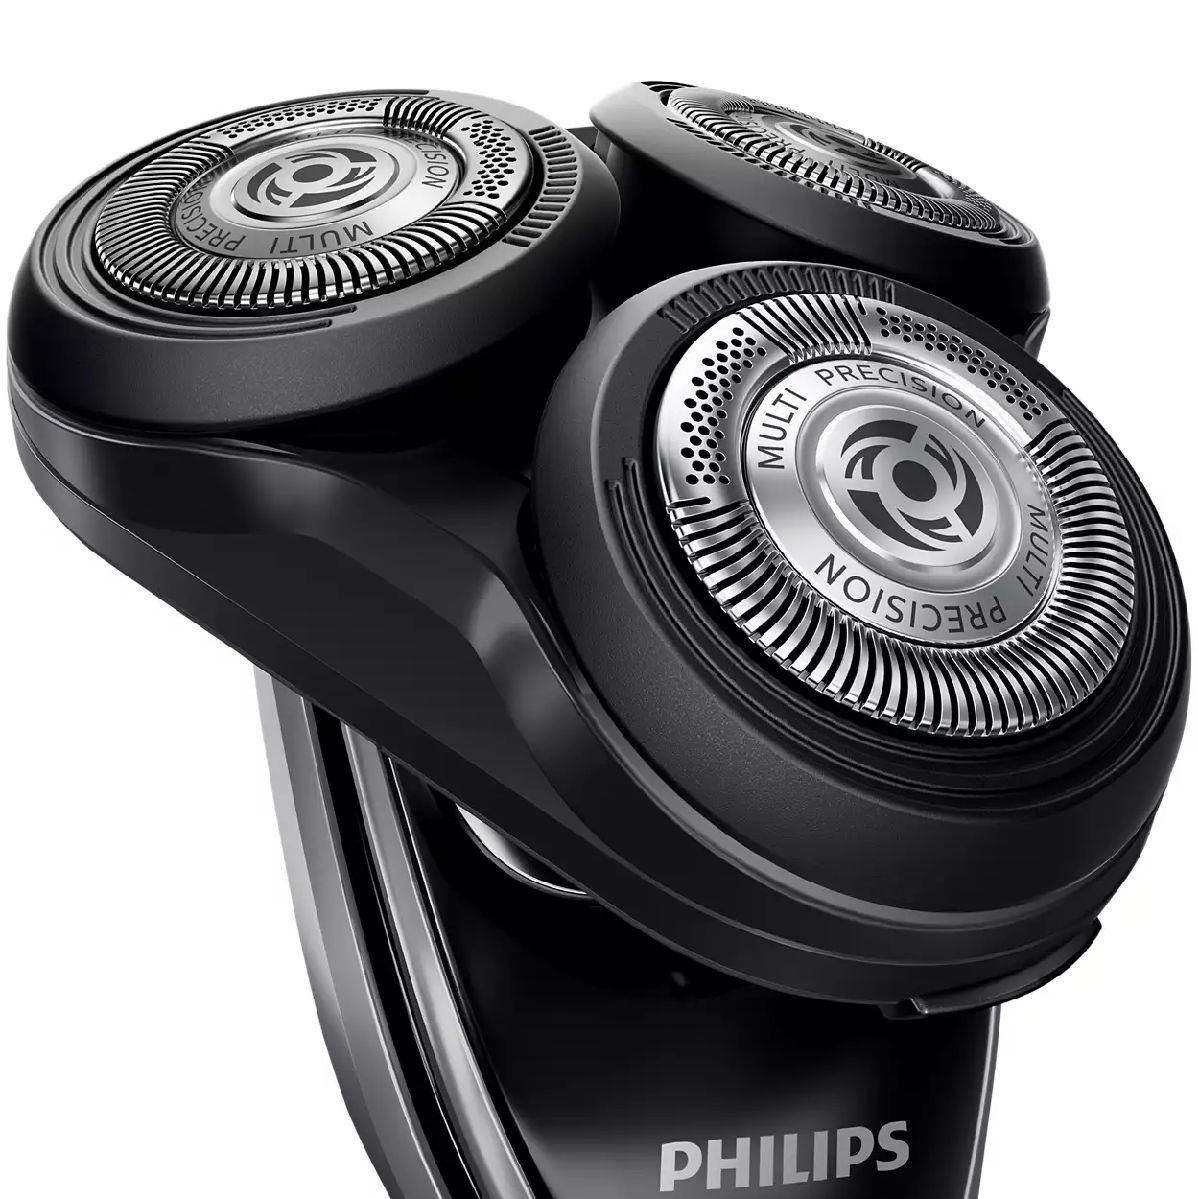 SH50 50 Бритвенные головки Philips 3шт (Shaver series 5000), оригинал (8710103736691)